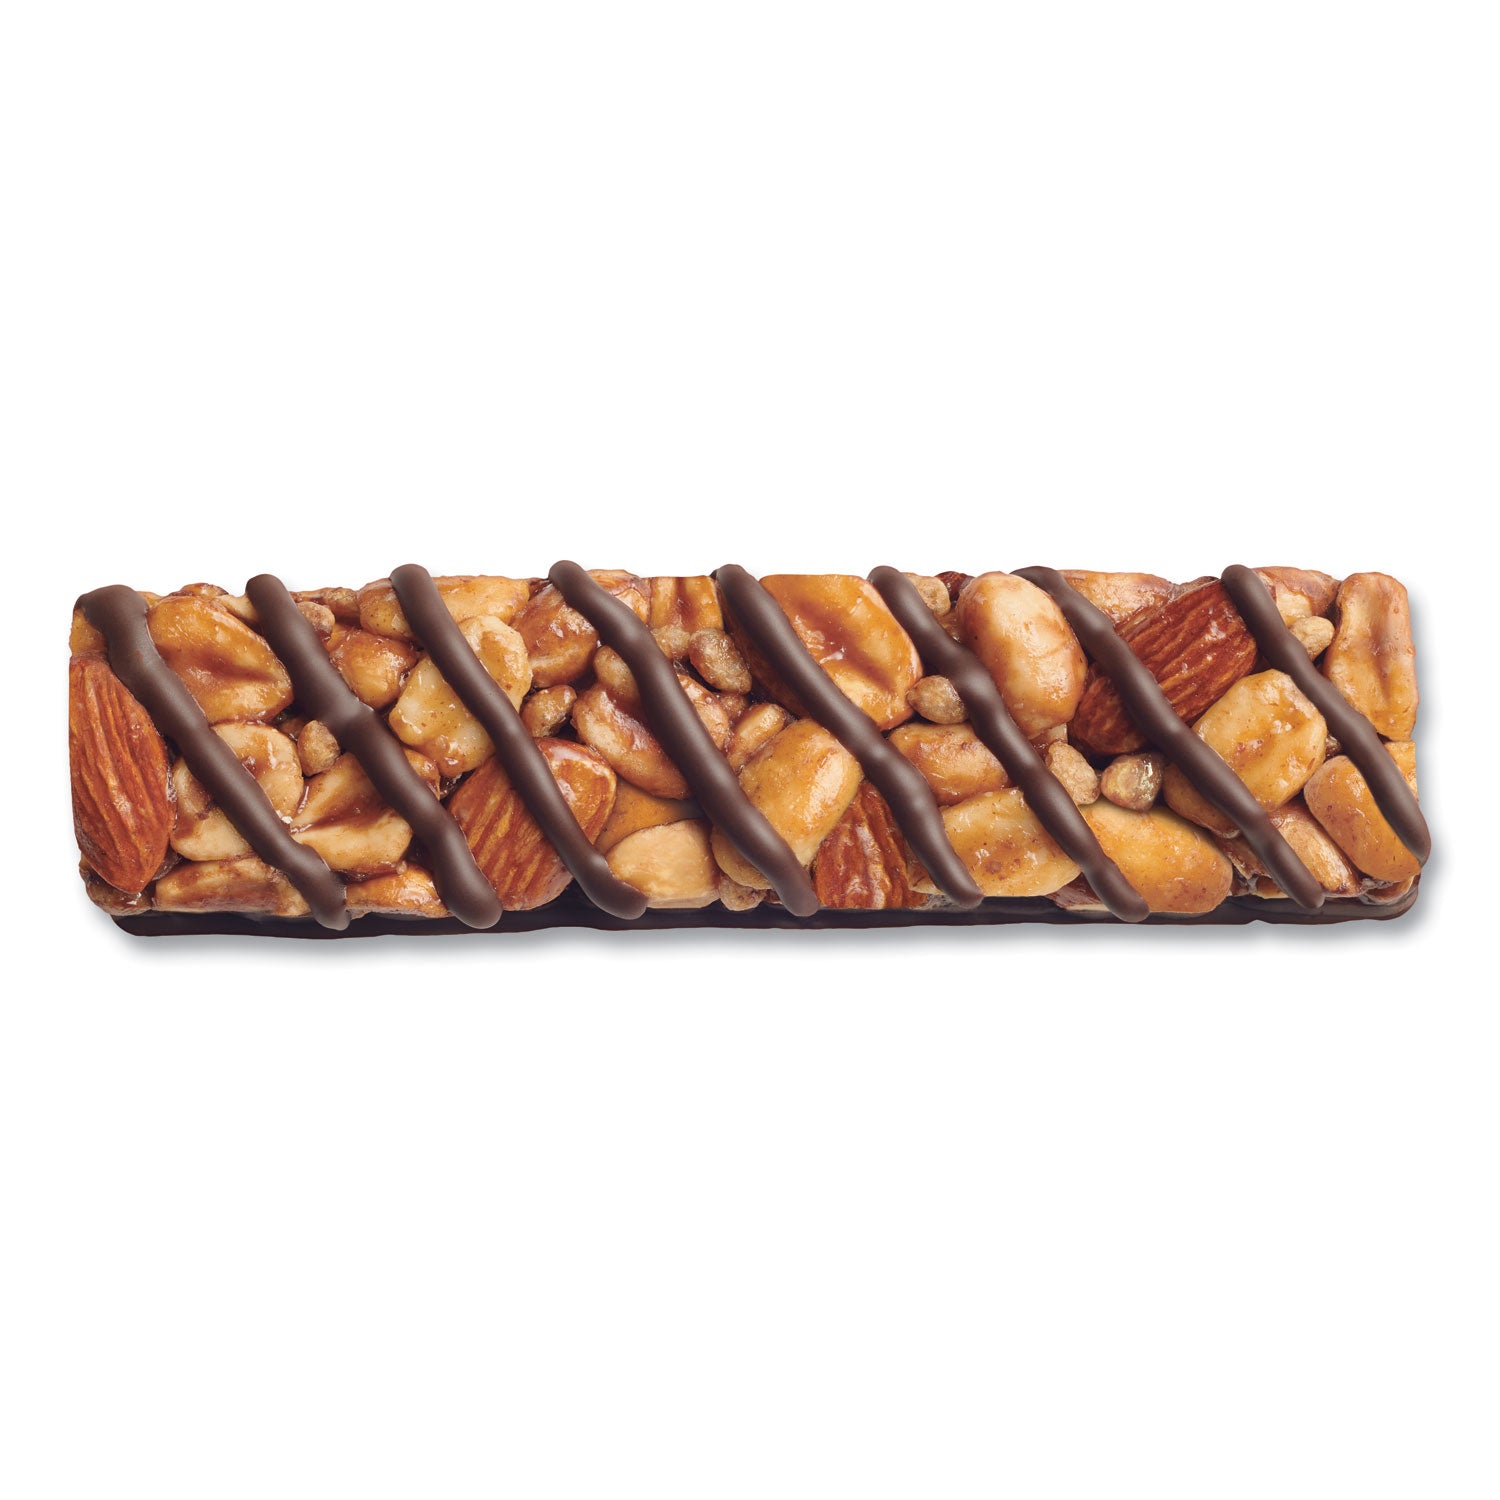 plus-nutrition-boost-bar-peanut-butter-dark-chocolate-protein-14-oz-12-box_knd17256 - 4